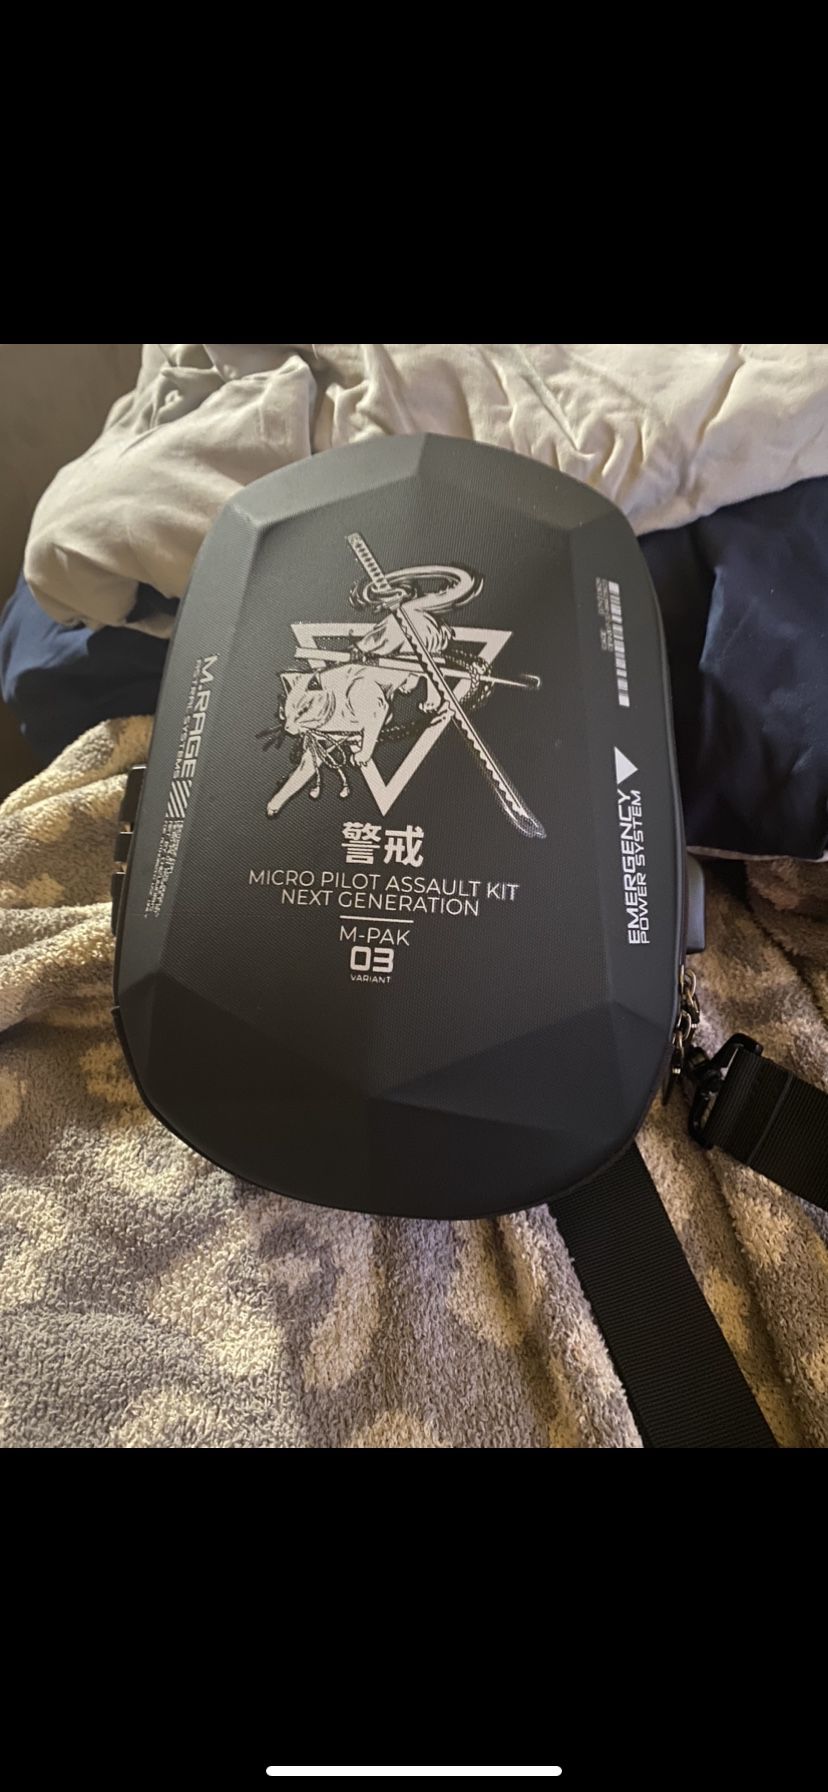 Micro Pilot Assault Kit (M-pak03) Black Stealth Bag